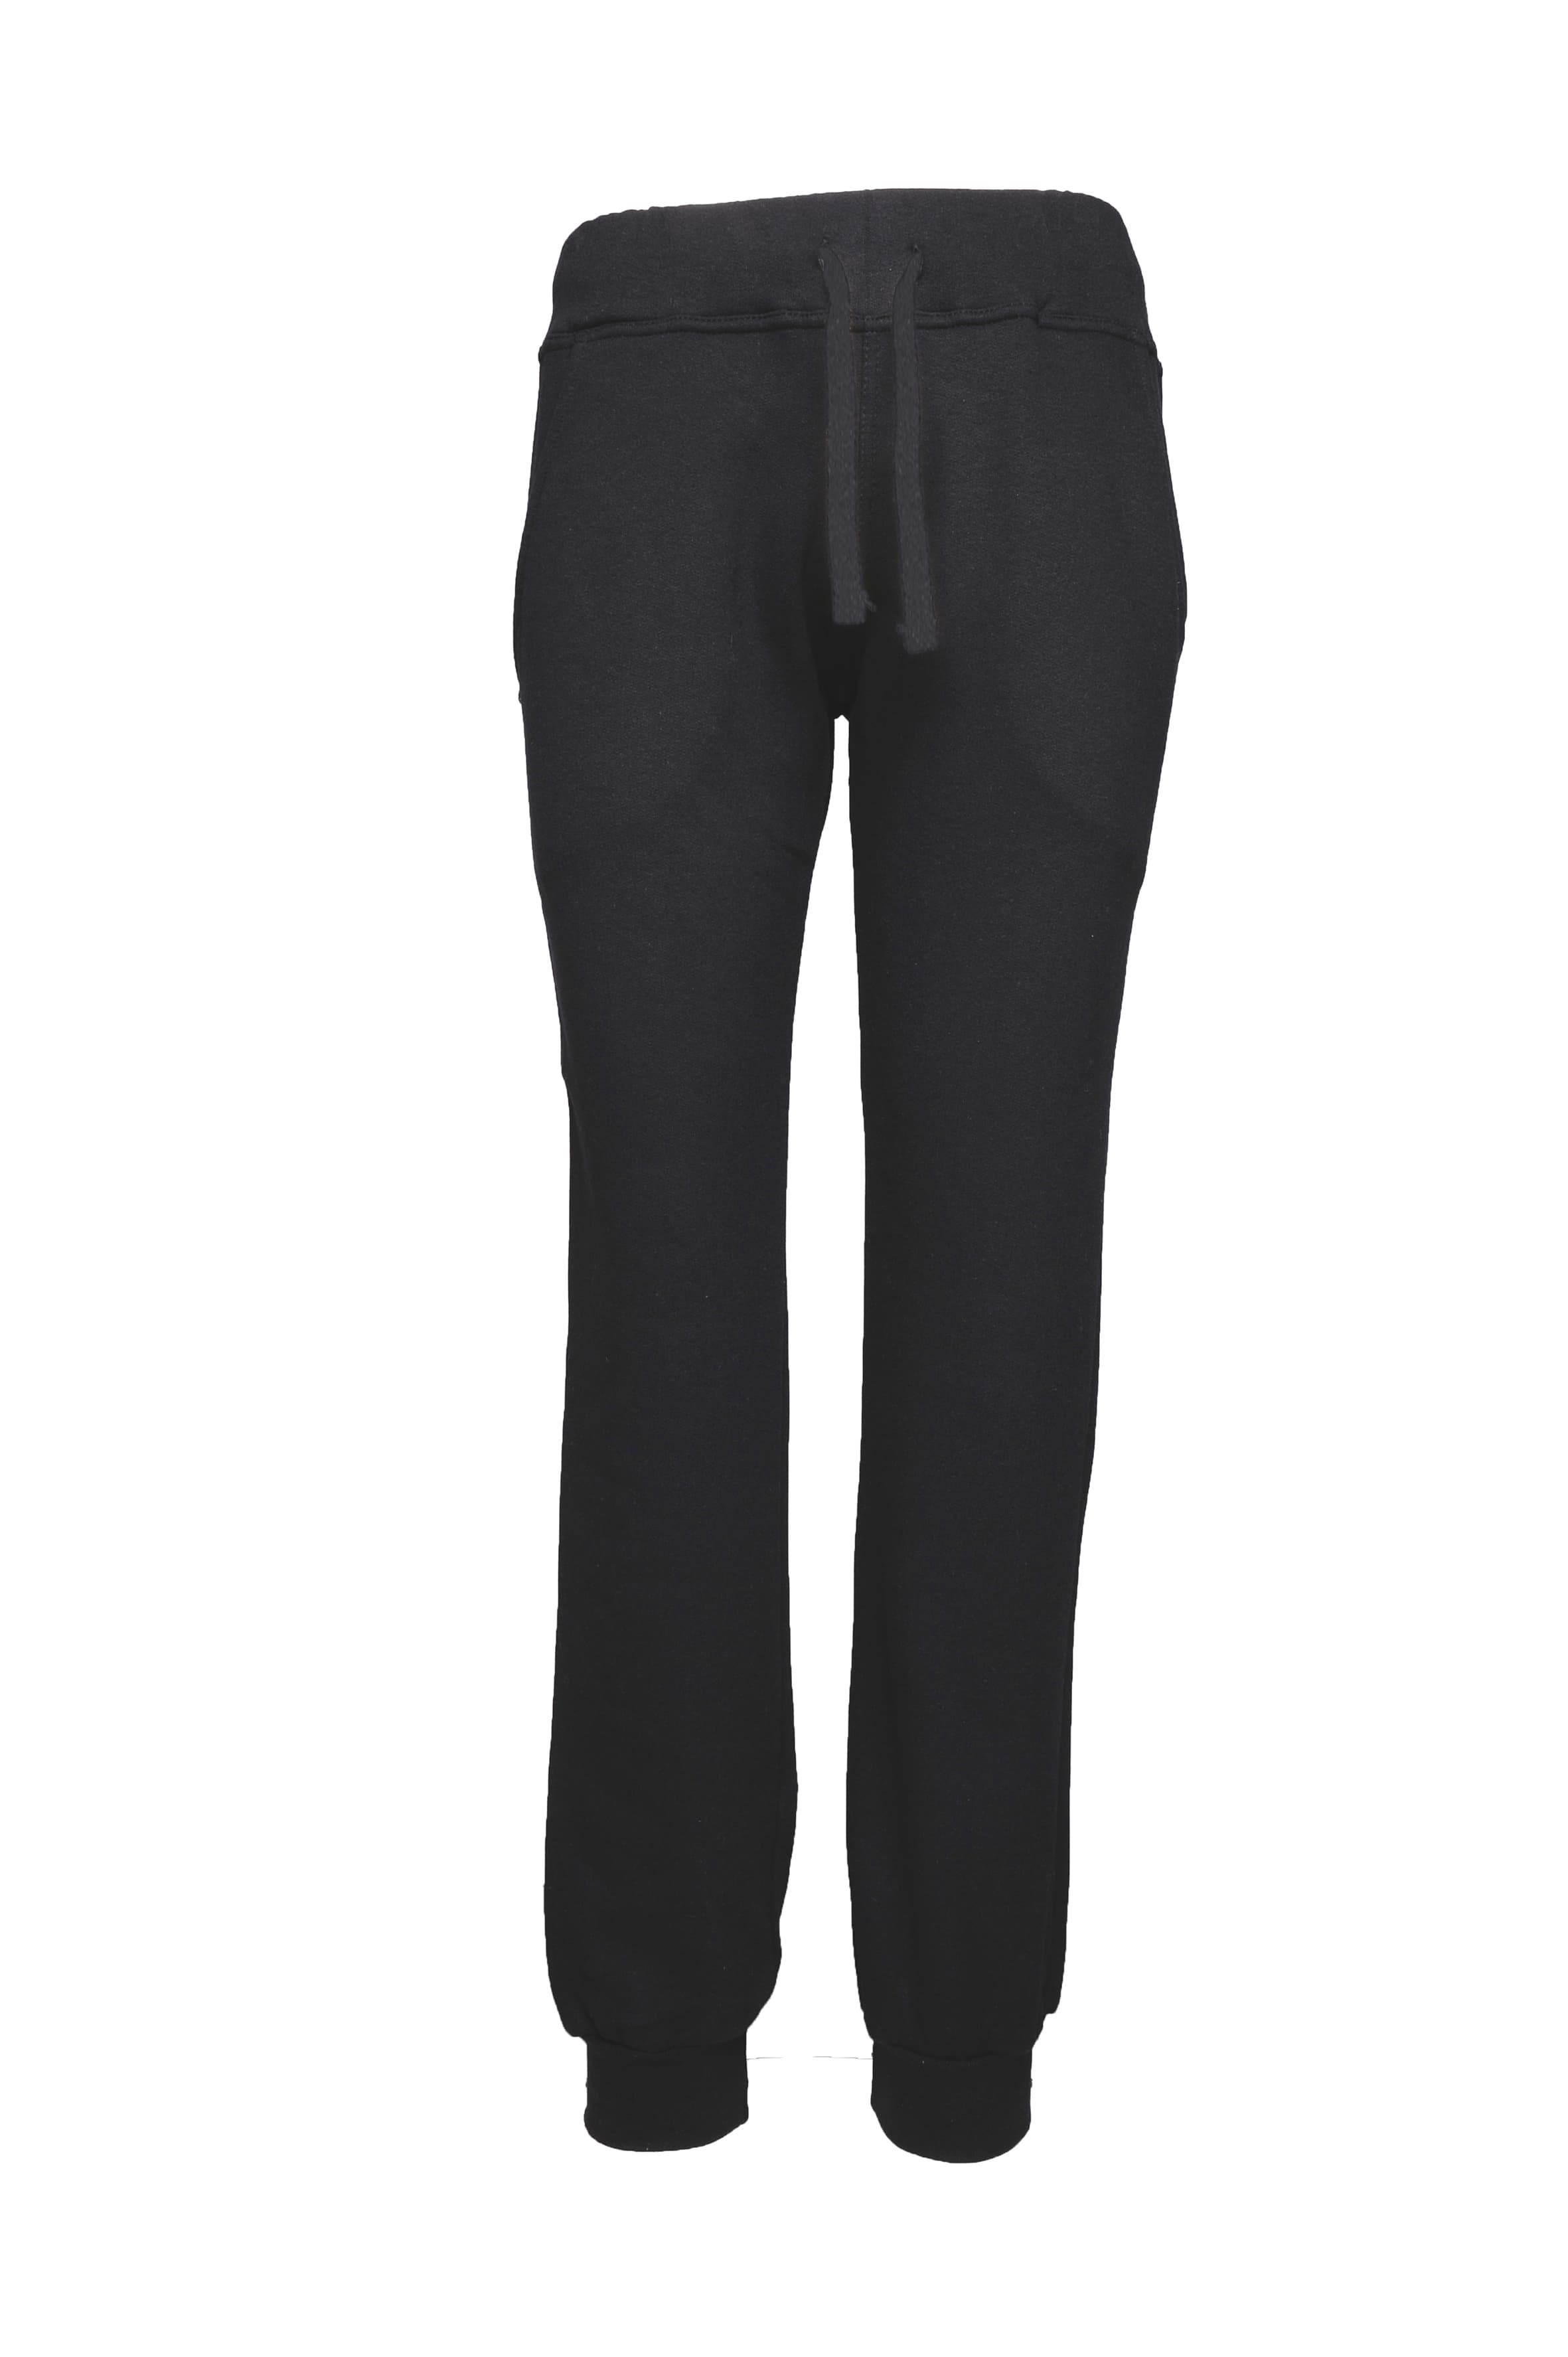 Pantalone Donna Felpa F/Terry 70/30% Cot/Pol 240gr Nero XS STK